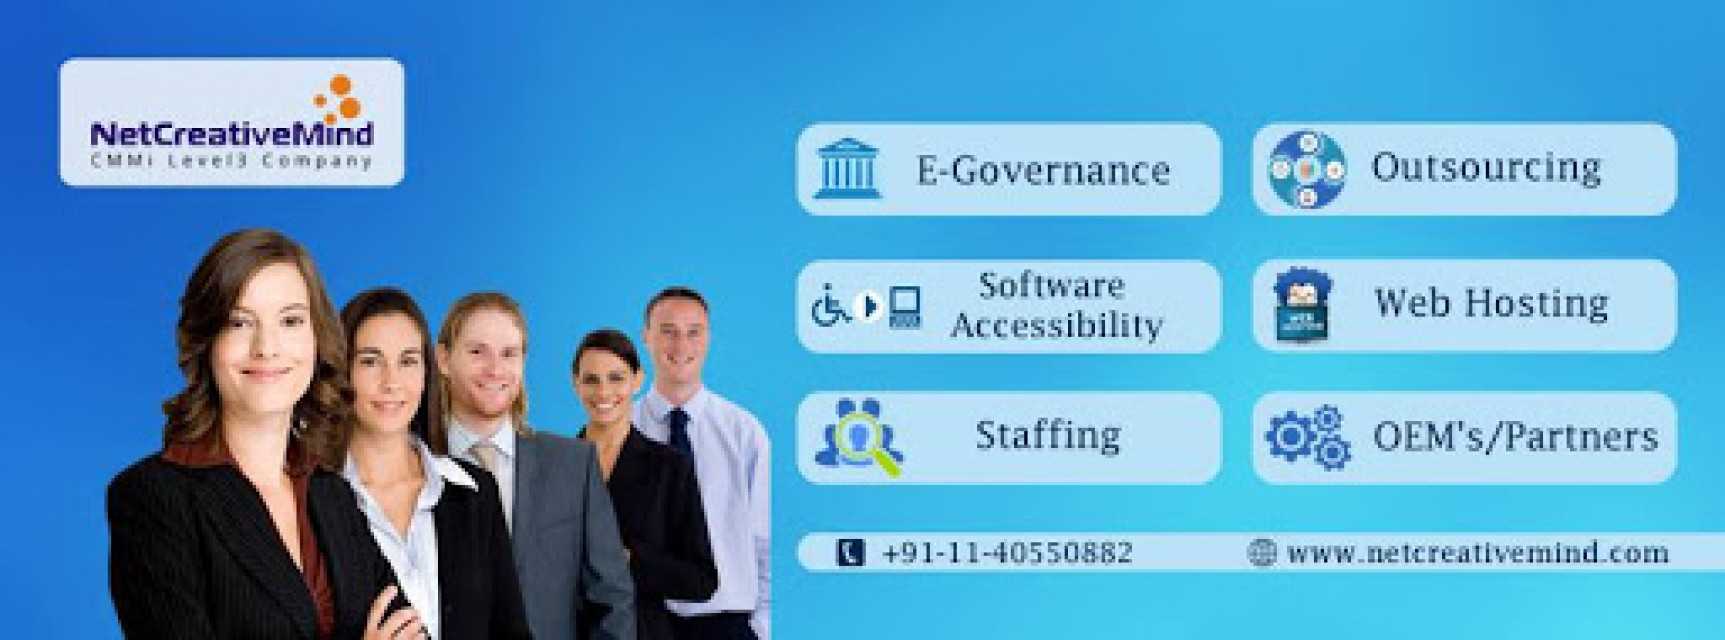 E-Governance, Staffing Solutions